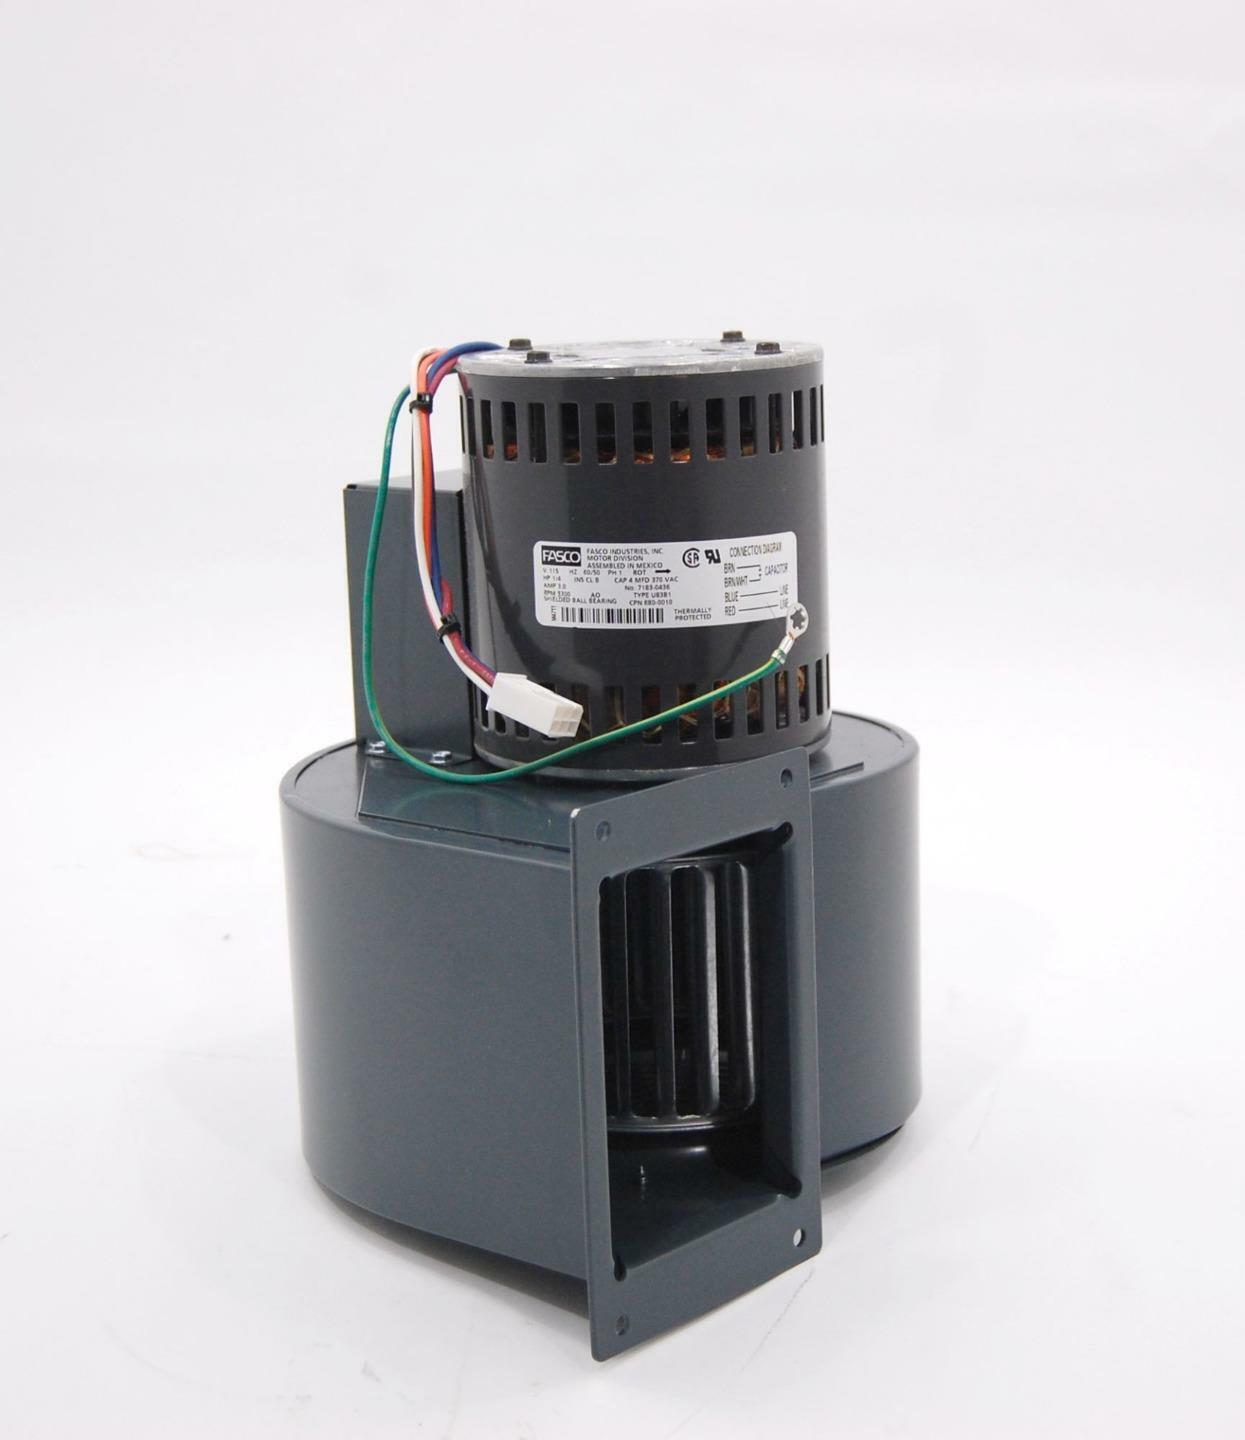 Fasco Powerware Centrifugal Blower 151101075 B48A39I-10 115 VAC 3 Amps